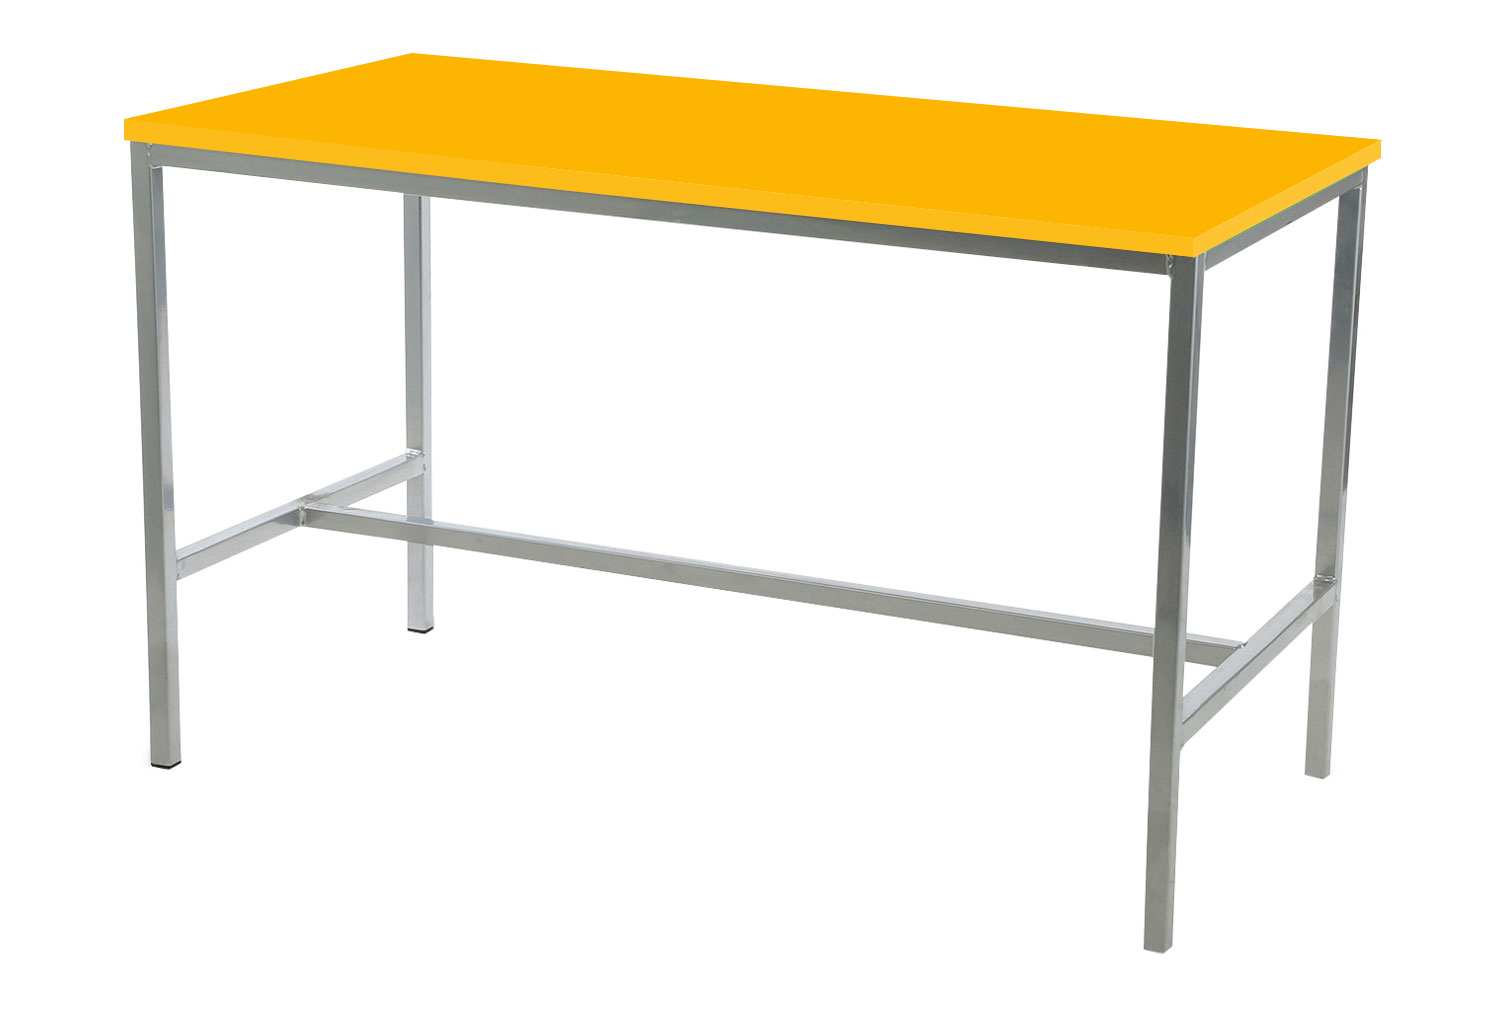 Qty 4 - Educate Standard Science Classroom Table 85cm High (PVC Edge), 120wx60dx85h (cm), Dark Grey Frame, Oak Top